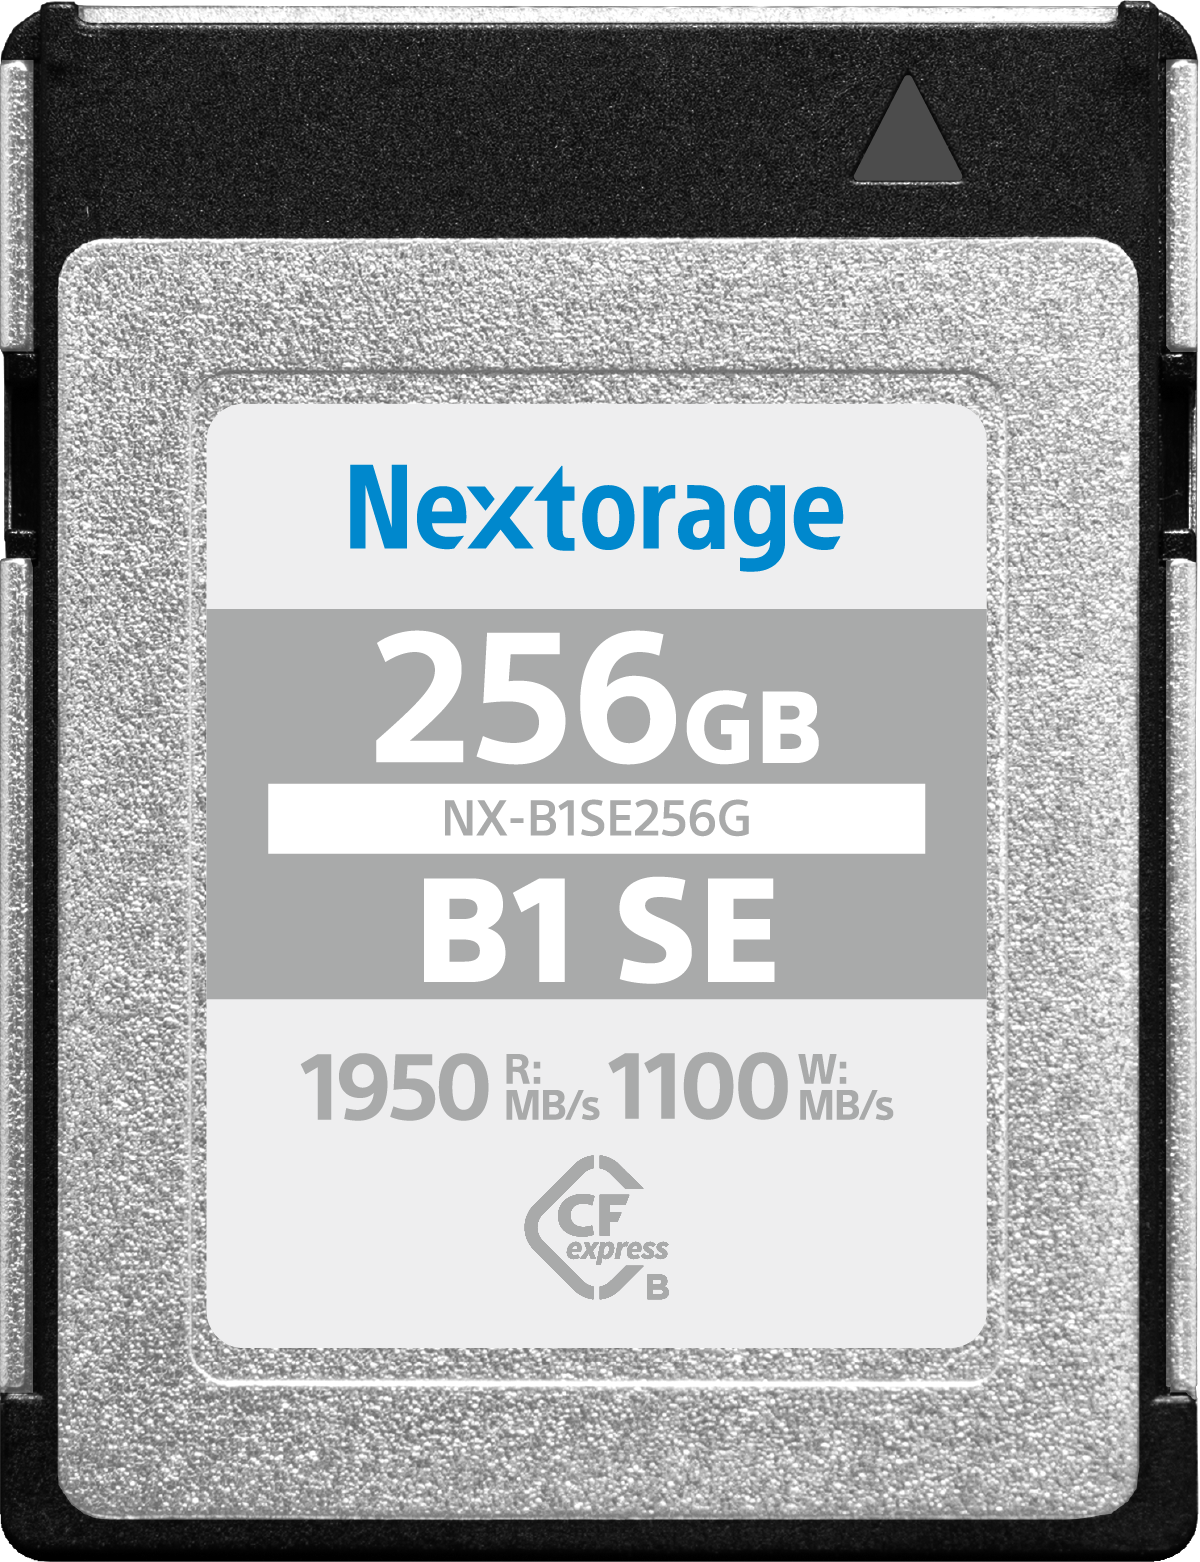 Nextorage Announces World's Fastest[1] CFexpress™ Type B Memory 